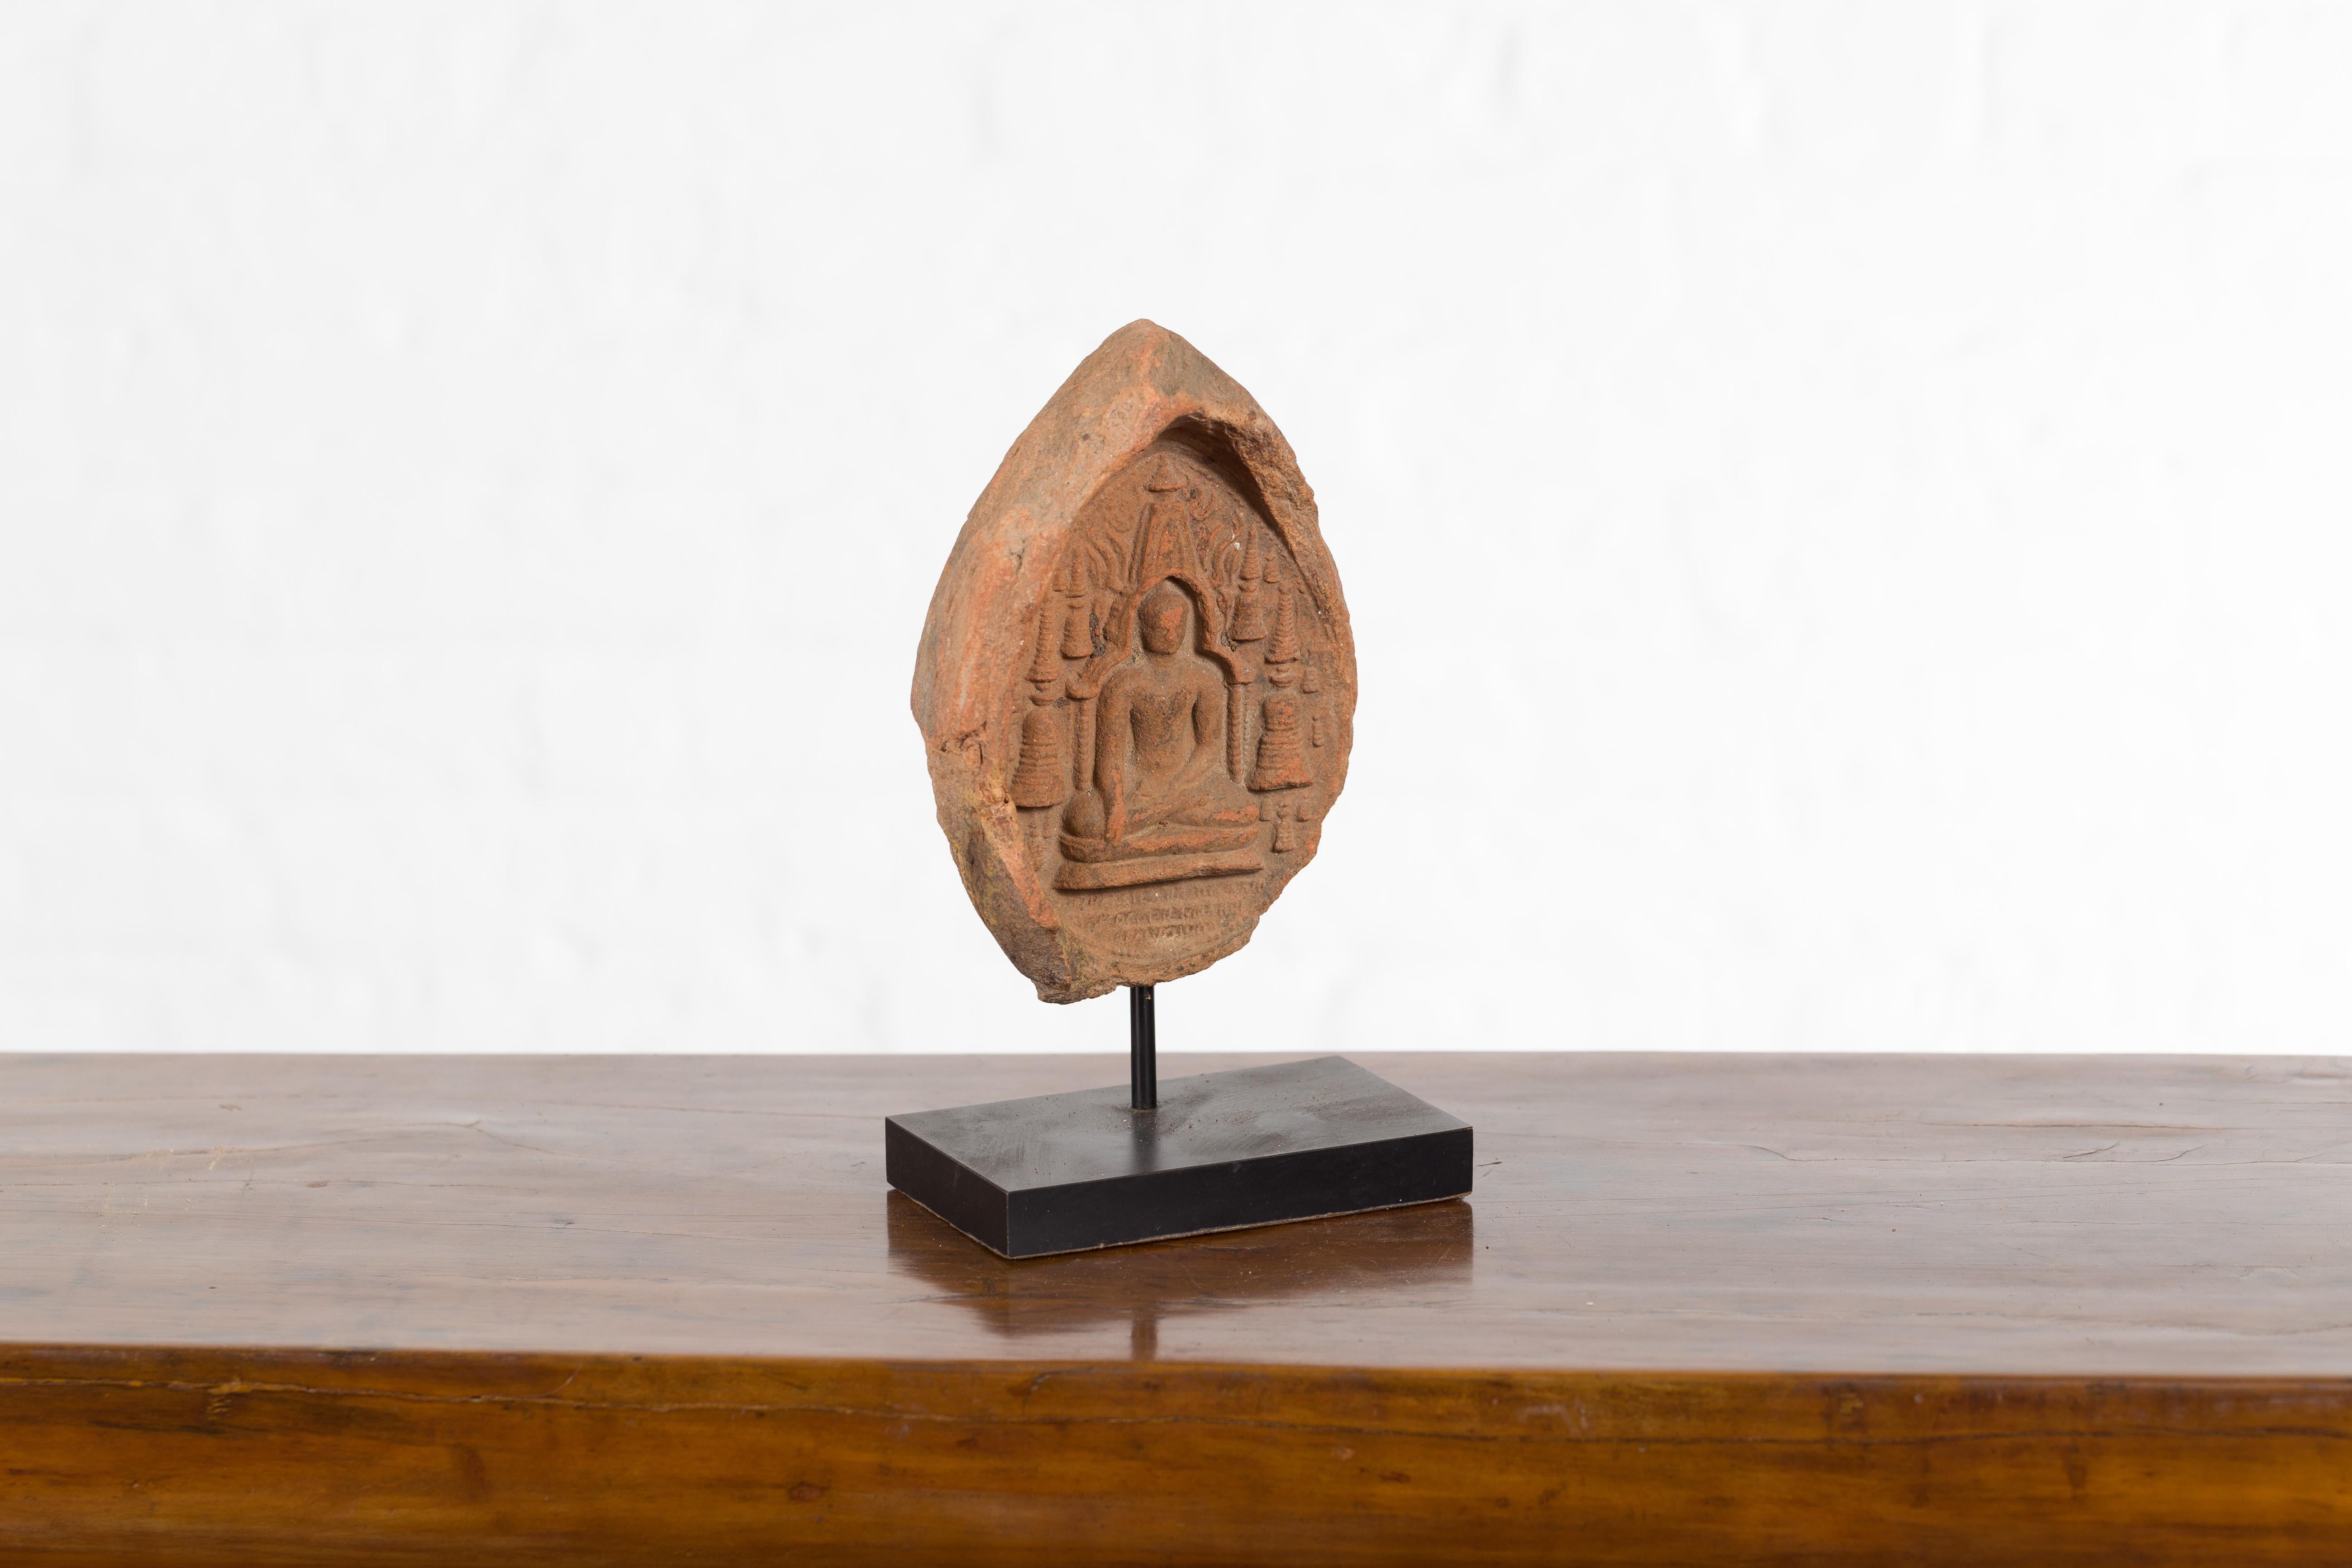 Burmese Pagan Empire 12th or 13th Century Votive Terracotta Buddha Bas-Relief 1